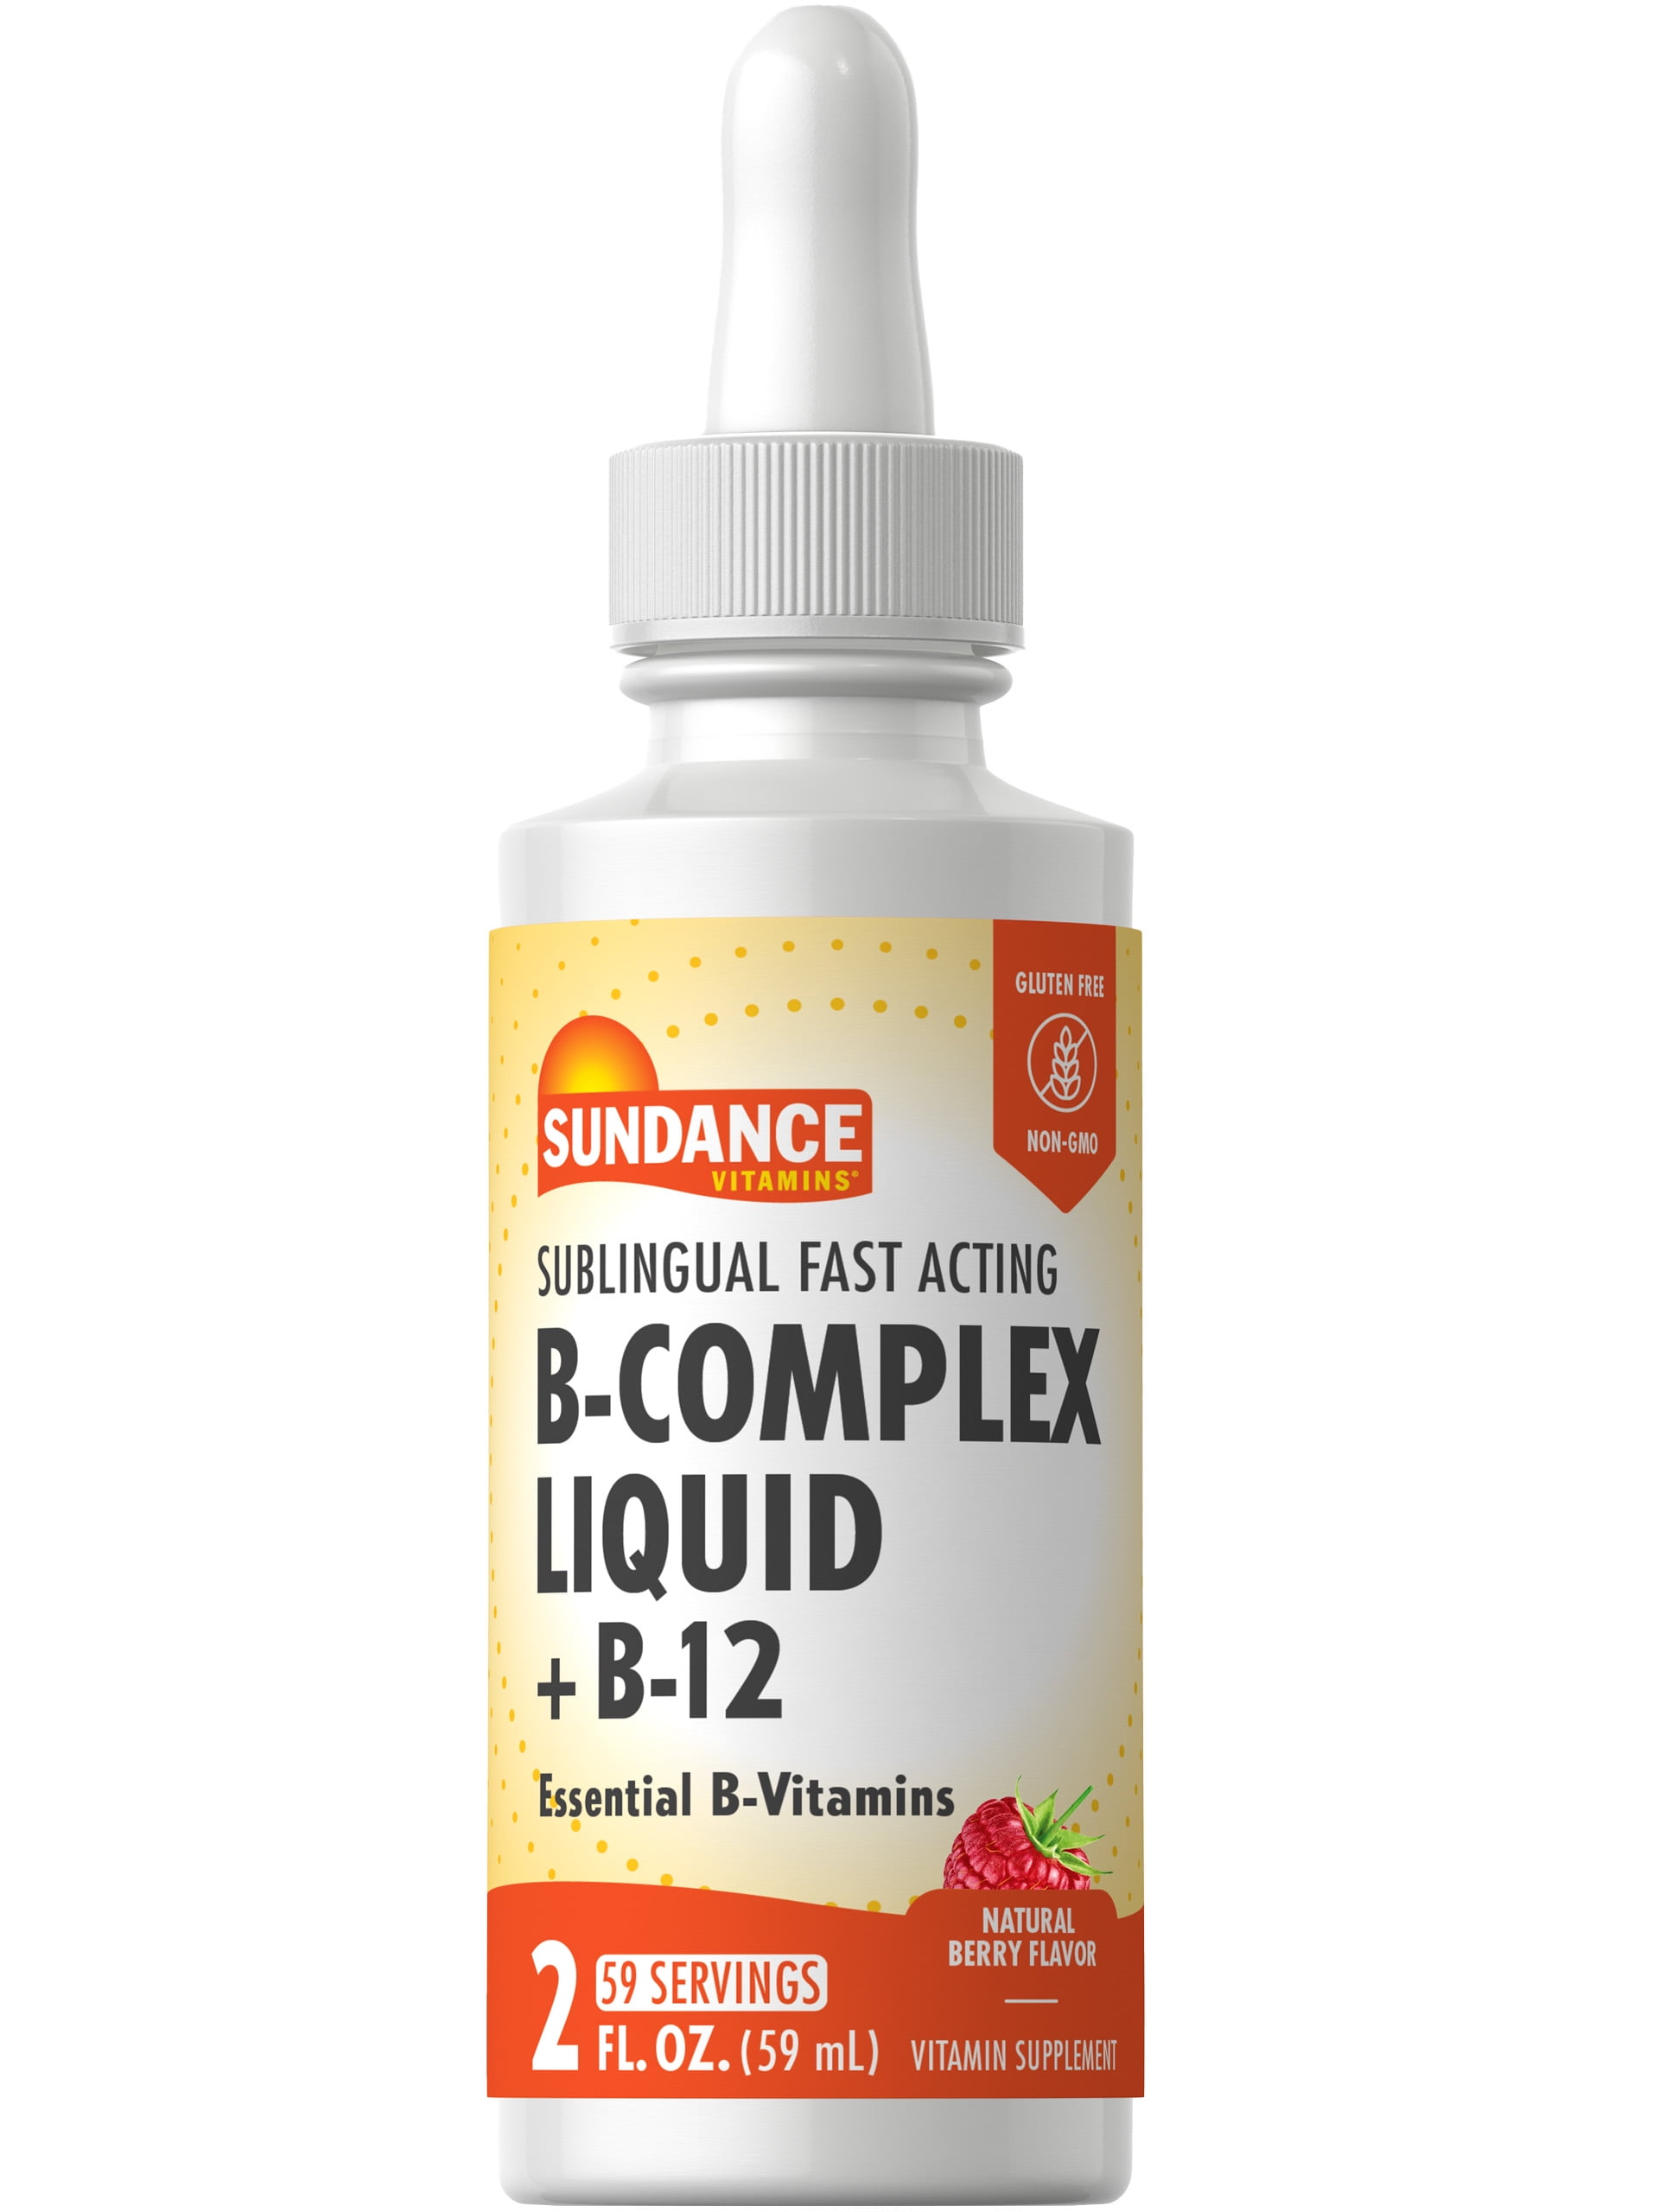 Vitamin B Complex Liquid | 2 Fluid Ounces | With B-12 | Natural Berry Flavor | Essential Sublingual Vitamins | Vegetarian, Non-GMO, Gluten Supplement | By Sundance - Walmart.com